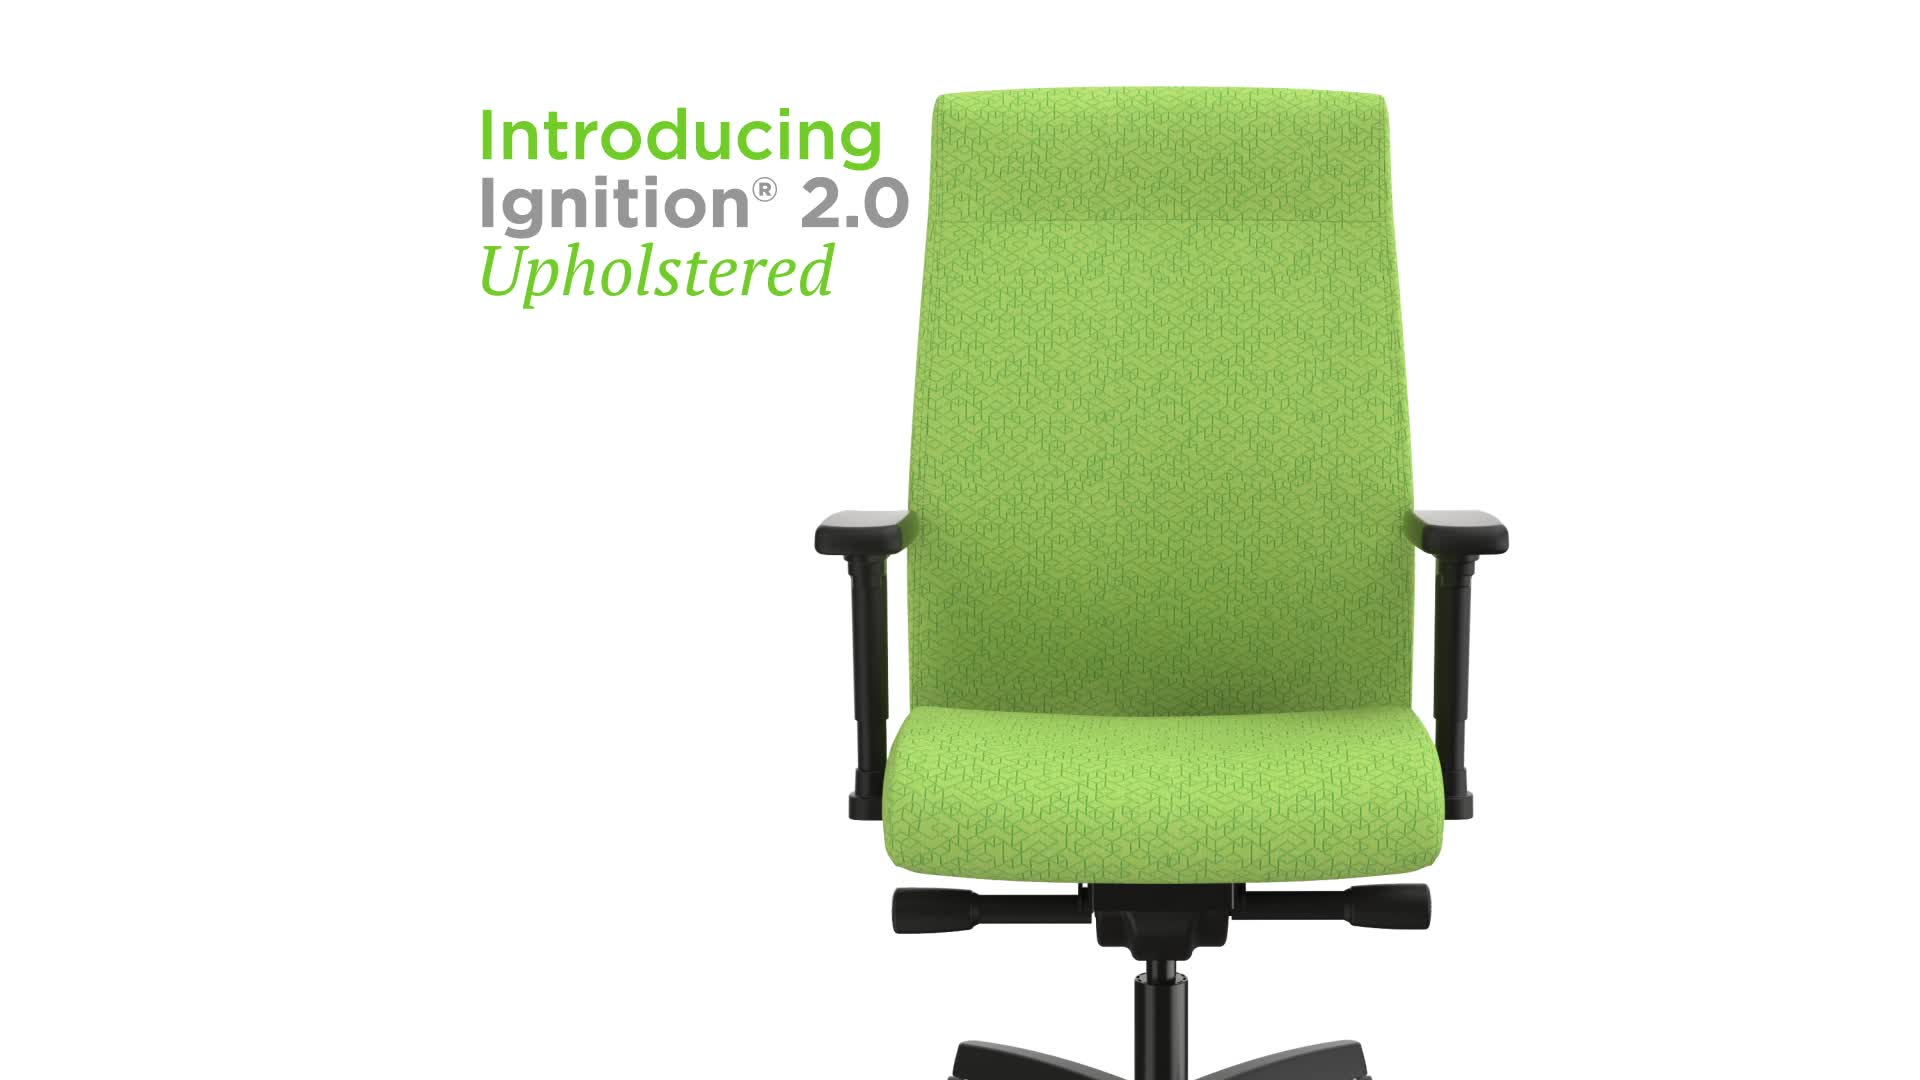 Ignition 2.0 Upholstered Animation video link